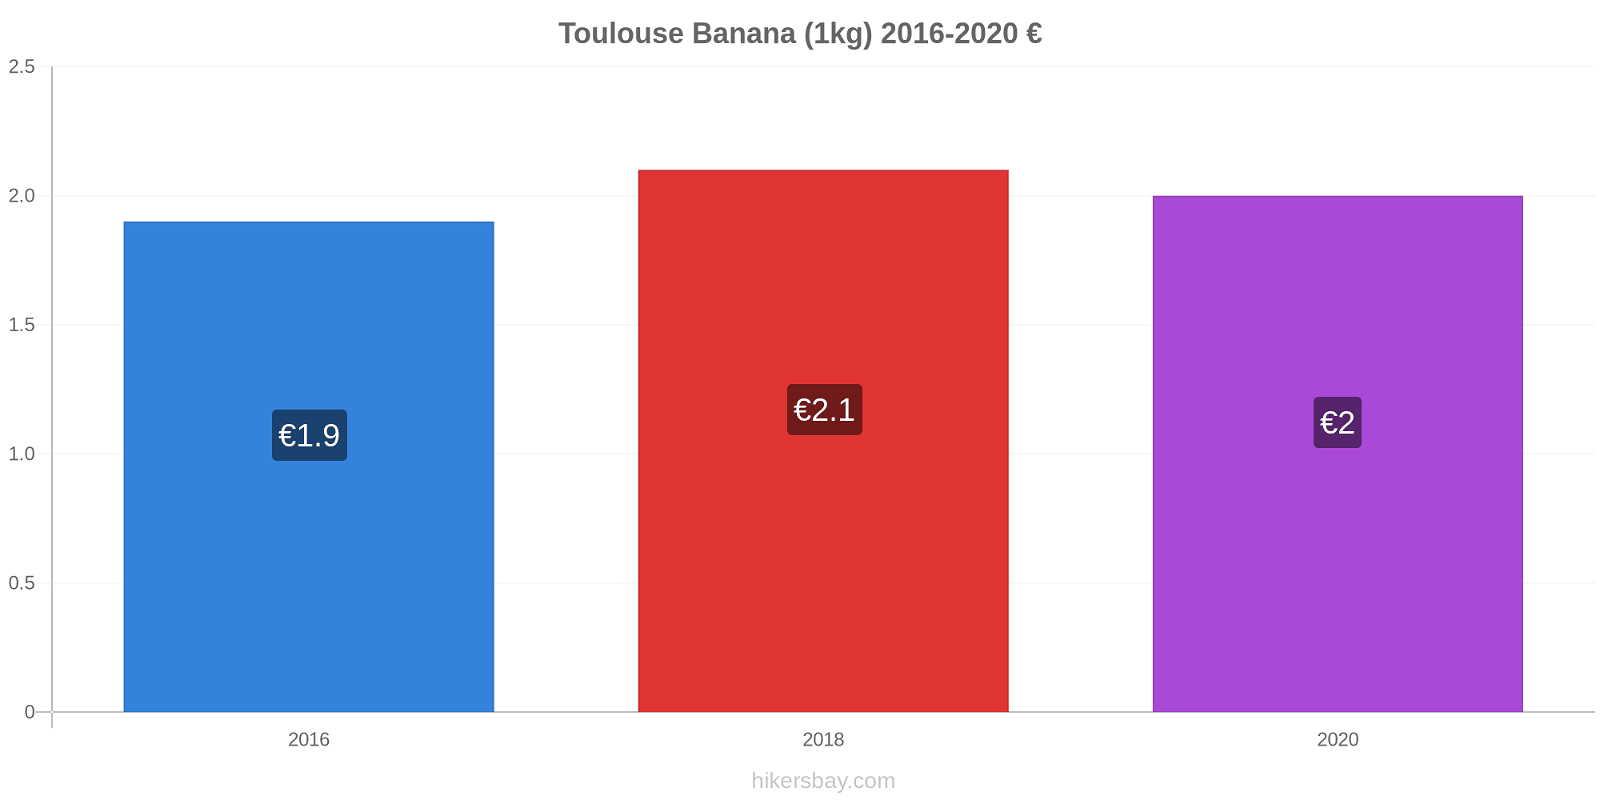 Toulouse modificări de preț Banana (1kg) hikersbay.com